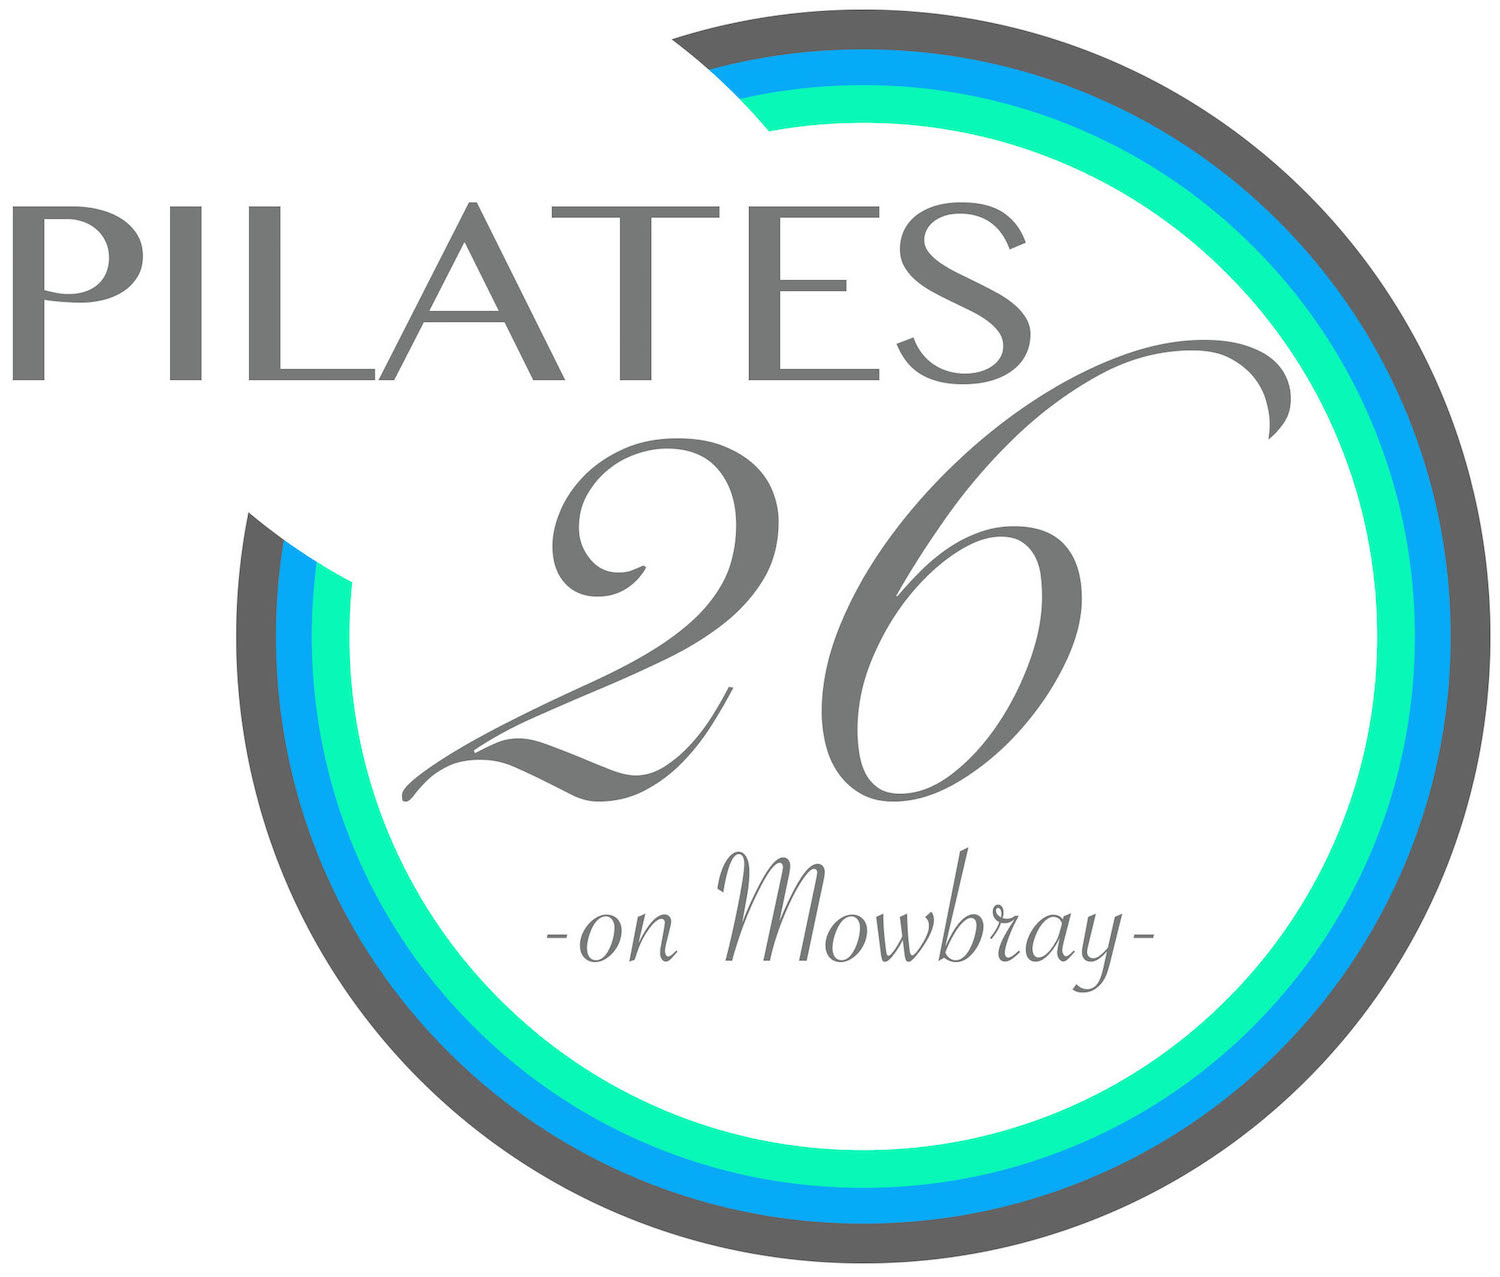 Pilates 26 Member Portal  Membership - Pilates 26 Member Portal